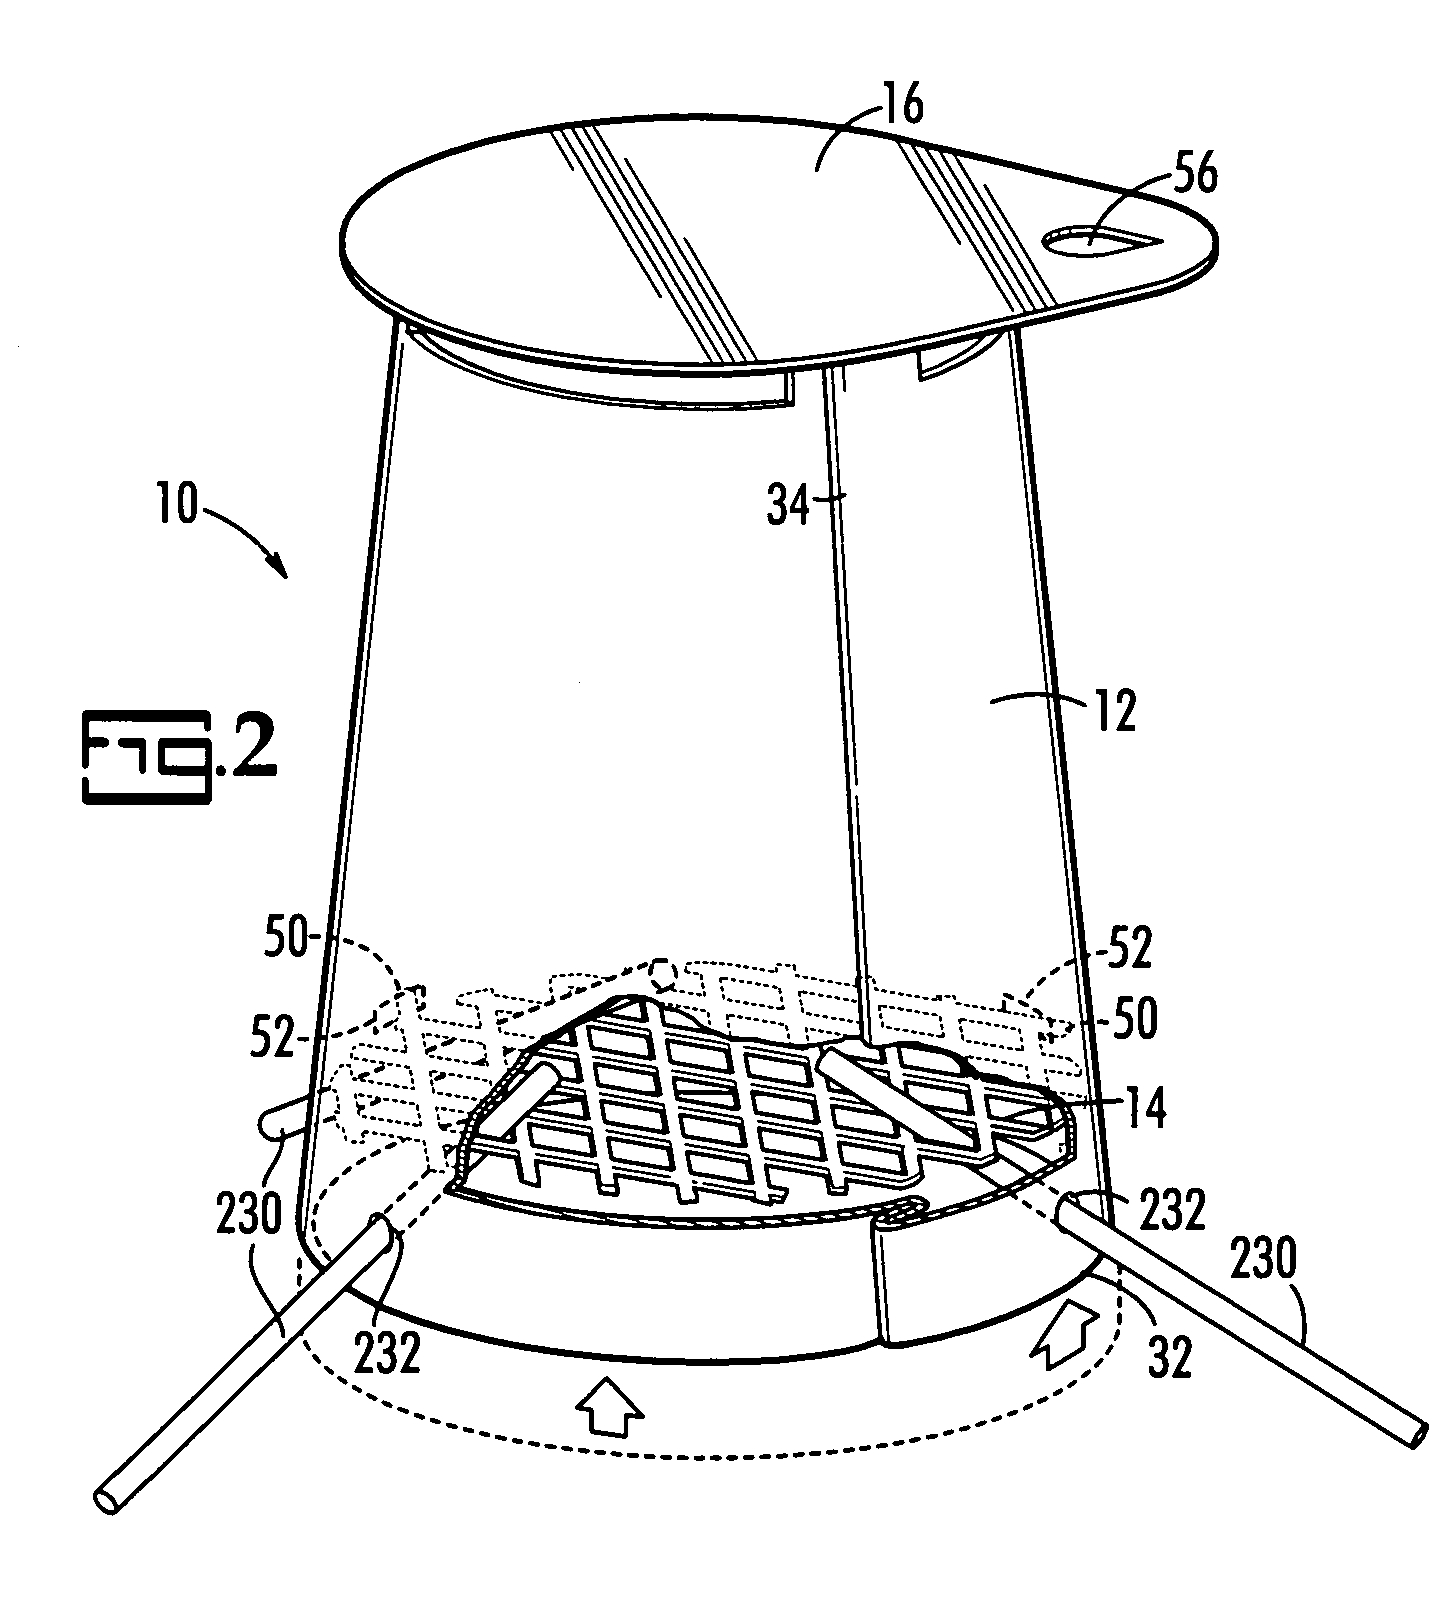 Portable stove